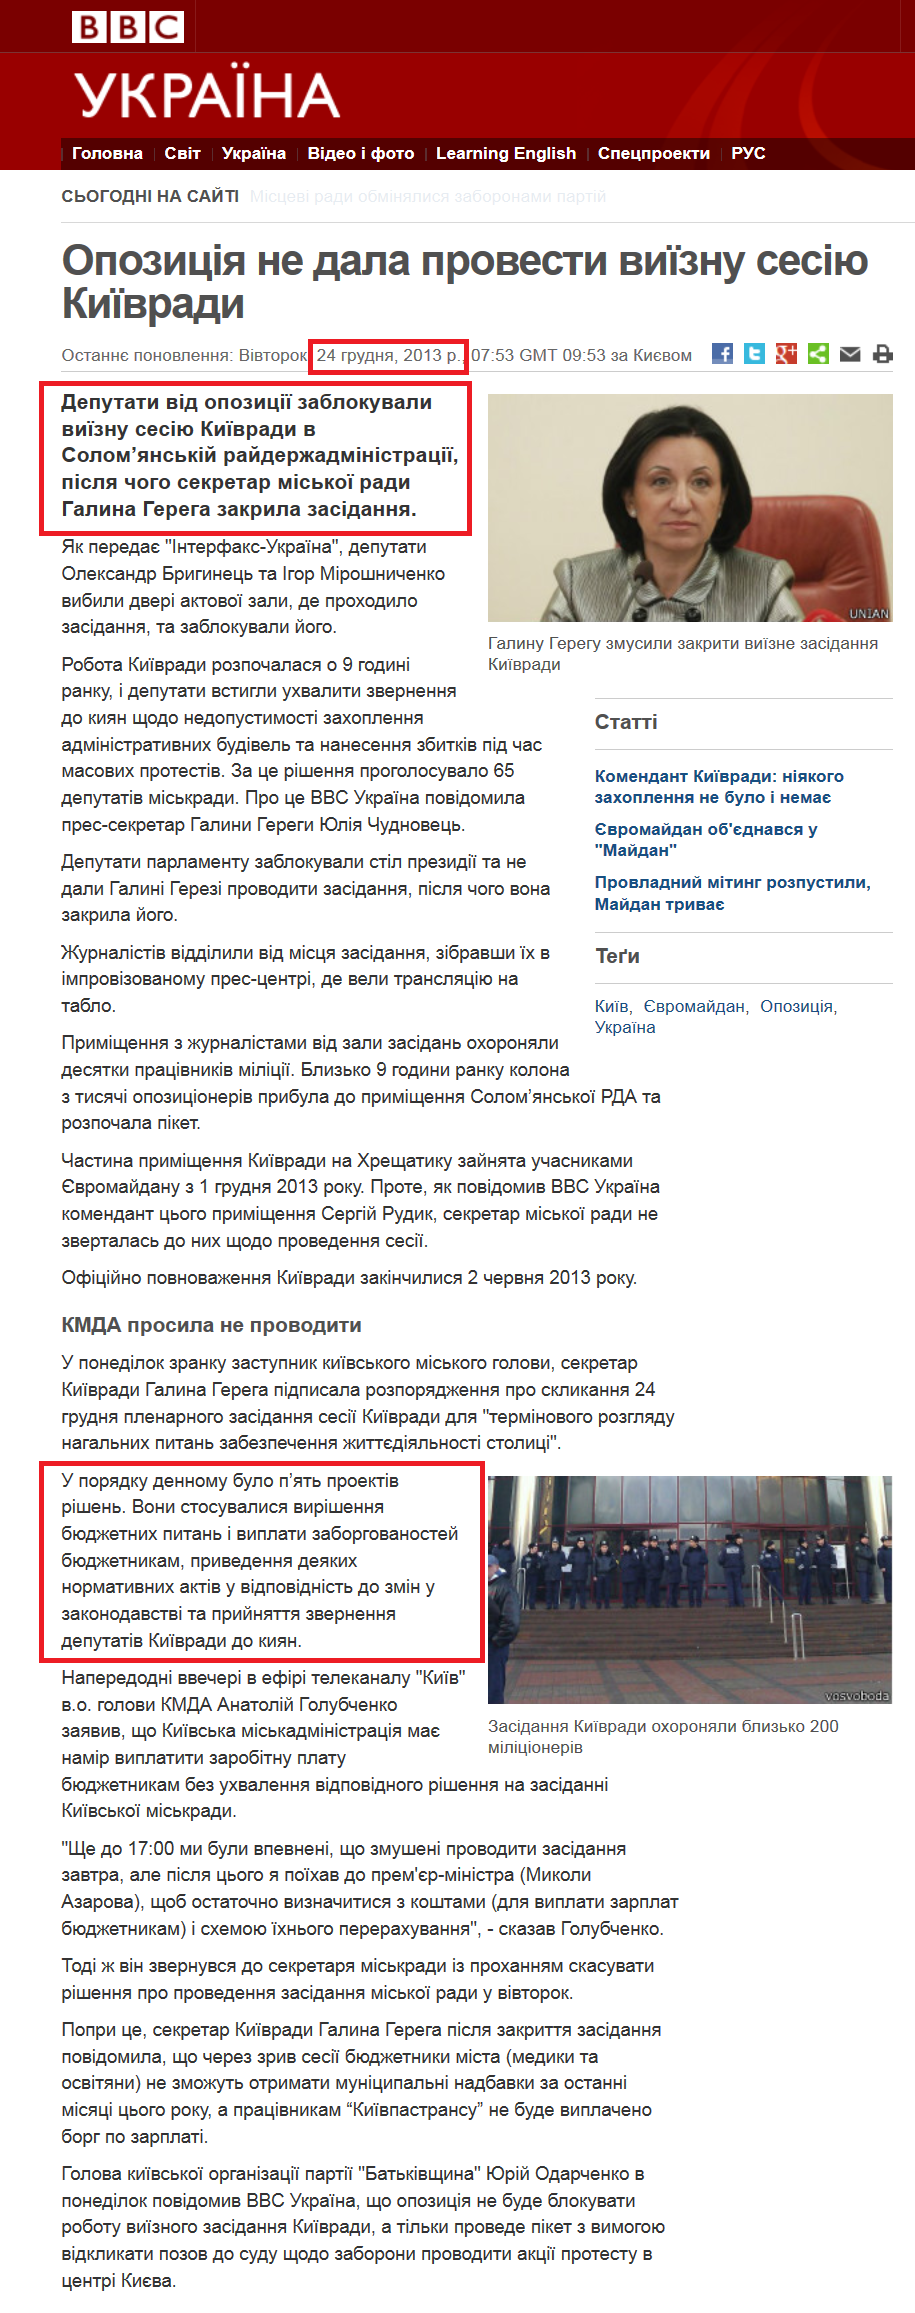 http://www.bbc.co.uk/ukrainian/politics/2013/12/131224_kyivrada_session_solomyanka_vc.shtml